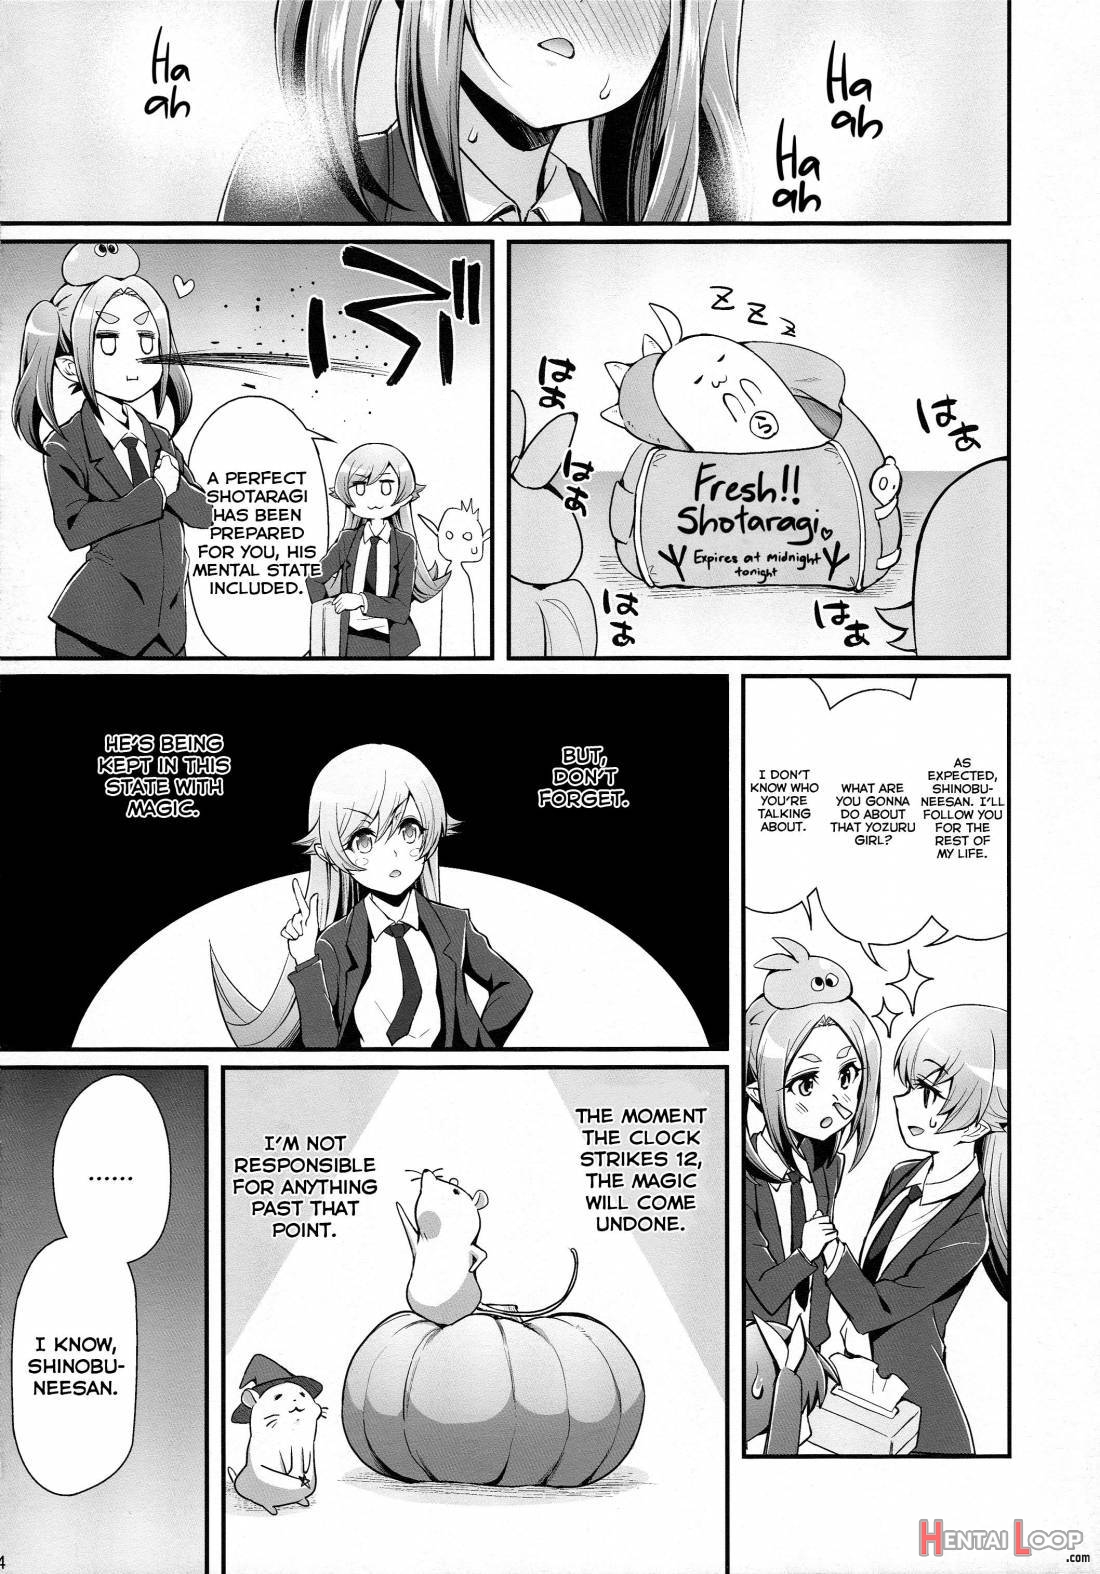 Pachimonogatari Part 14: Yotsugi Success page 4